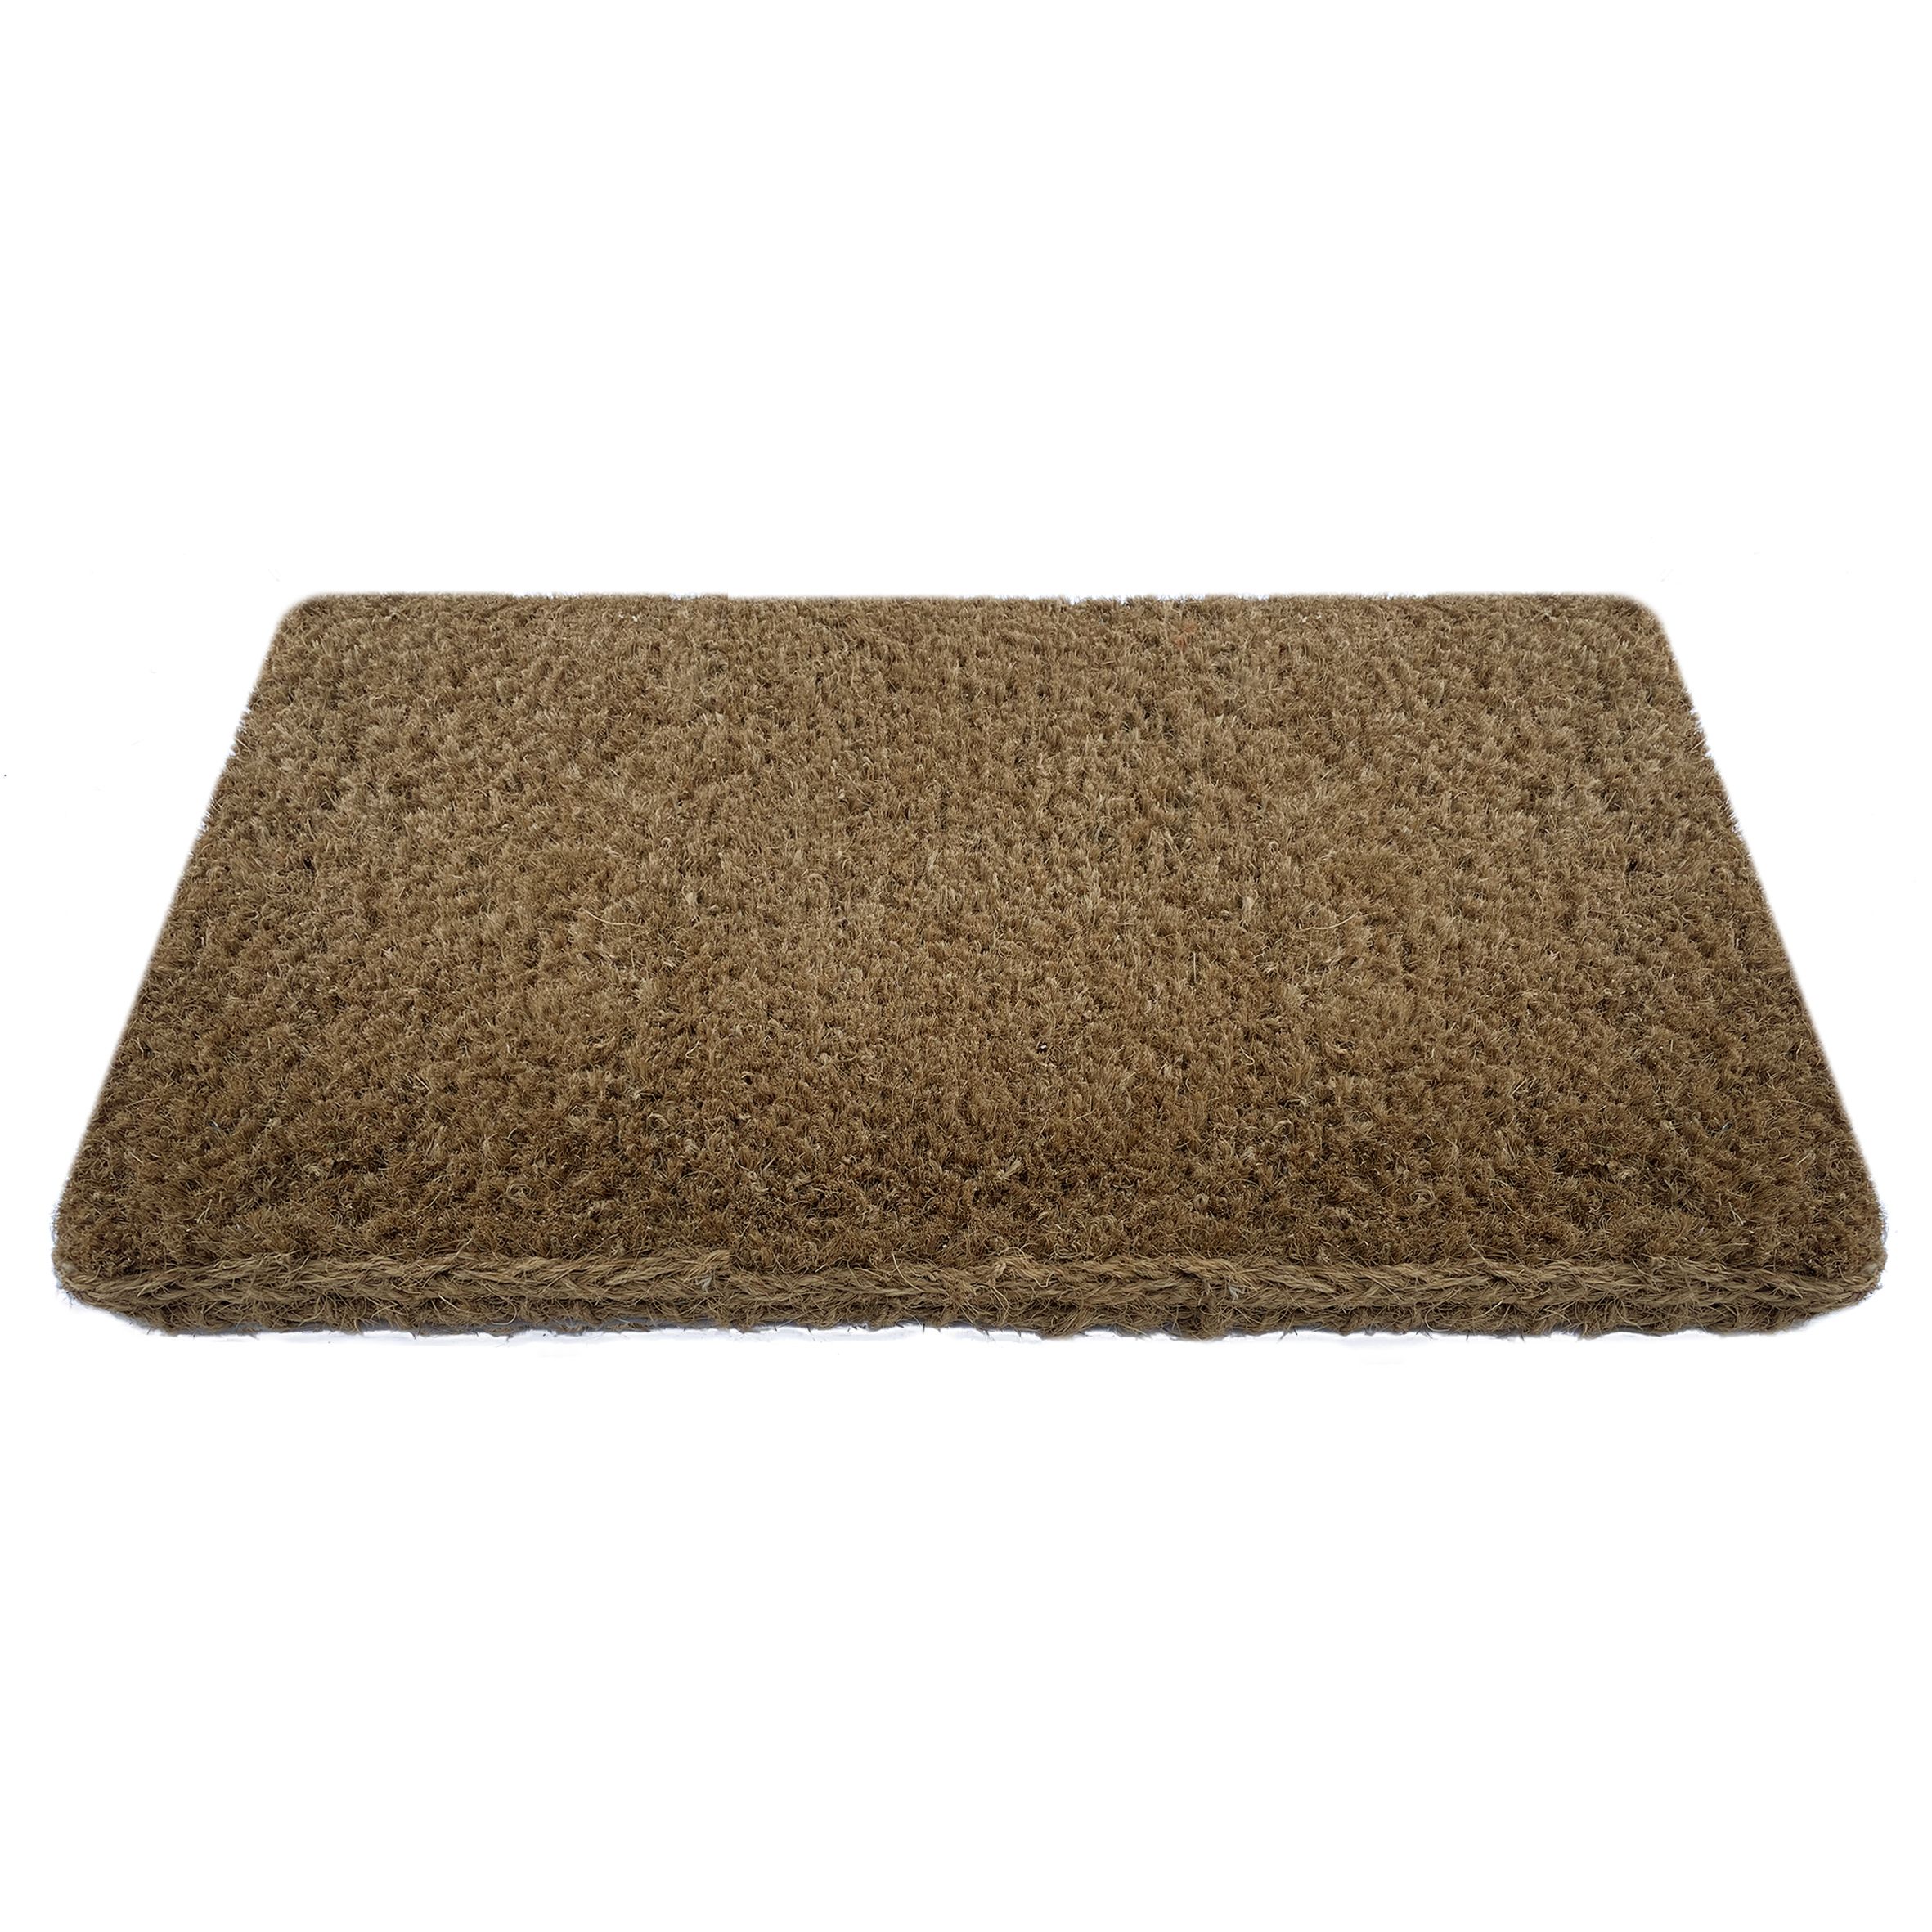 Melford Brown Plain Heavy duty Door mat, 100cm x 60cm